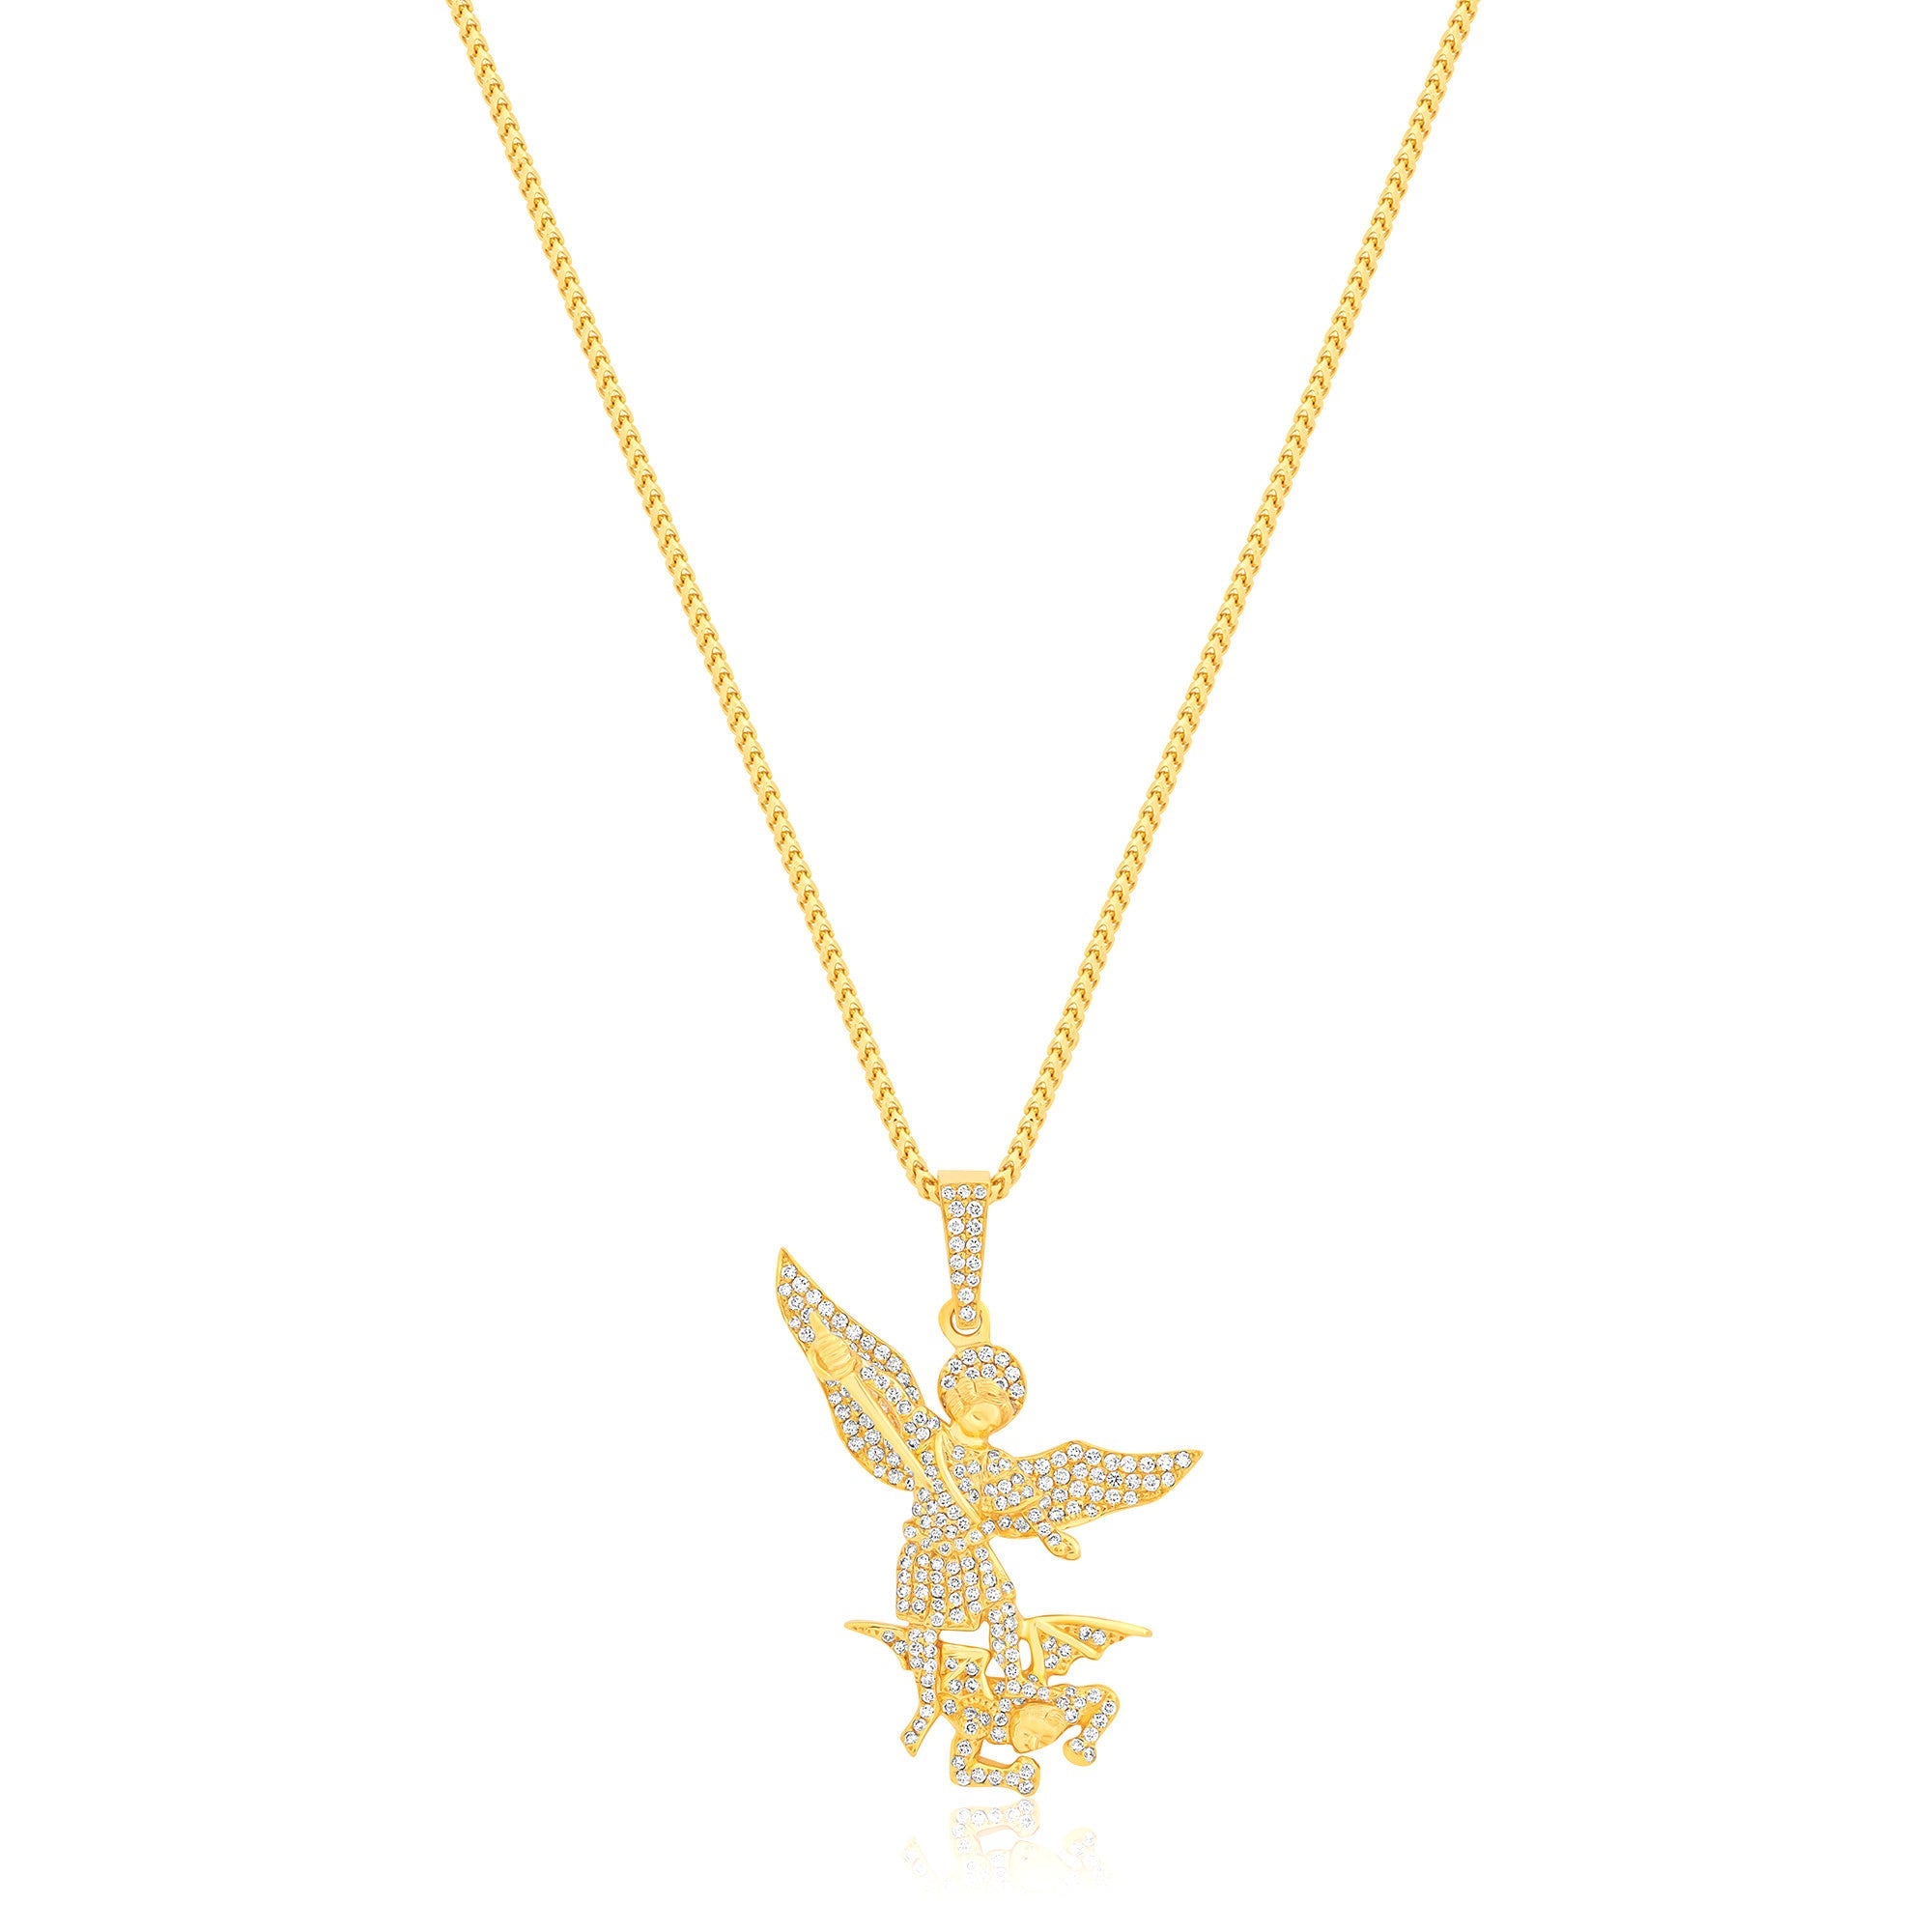 Micro Saint Michael Arch Angel Piece (Fully Iced) (14K YELLOW GOLD) - IF & Co. Custom Jewelers